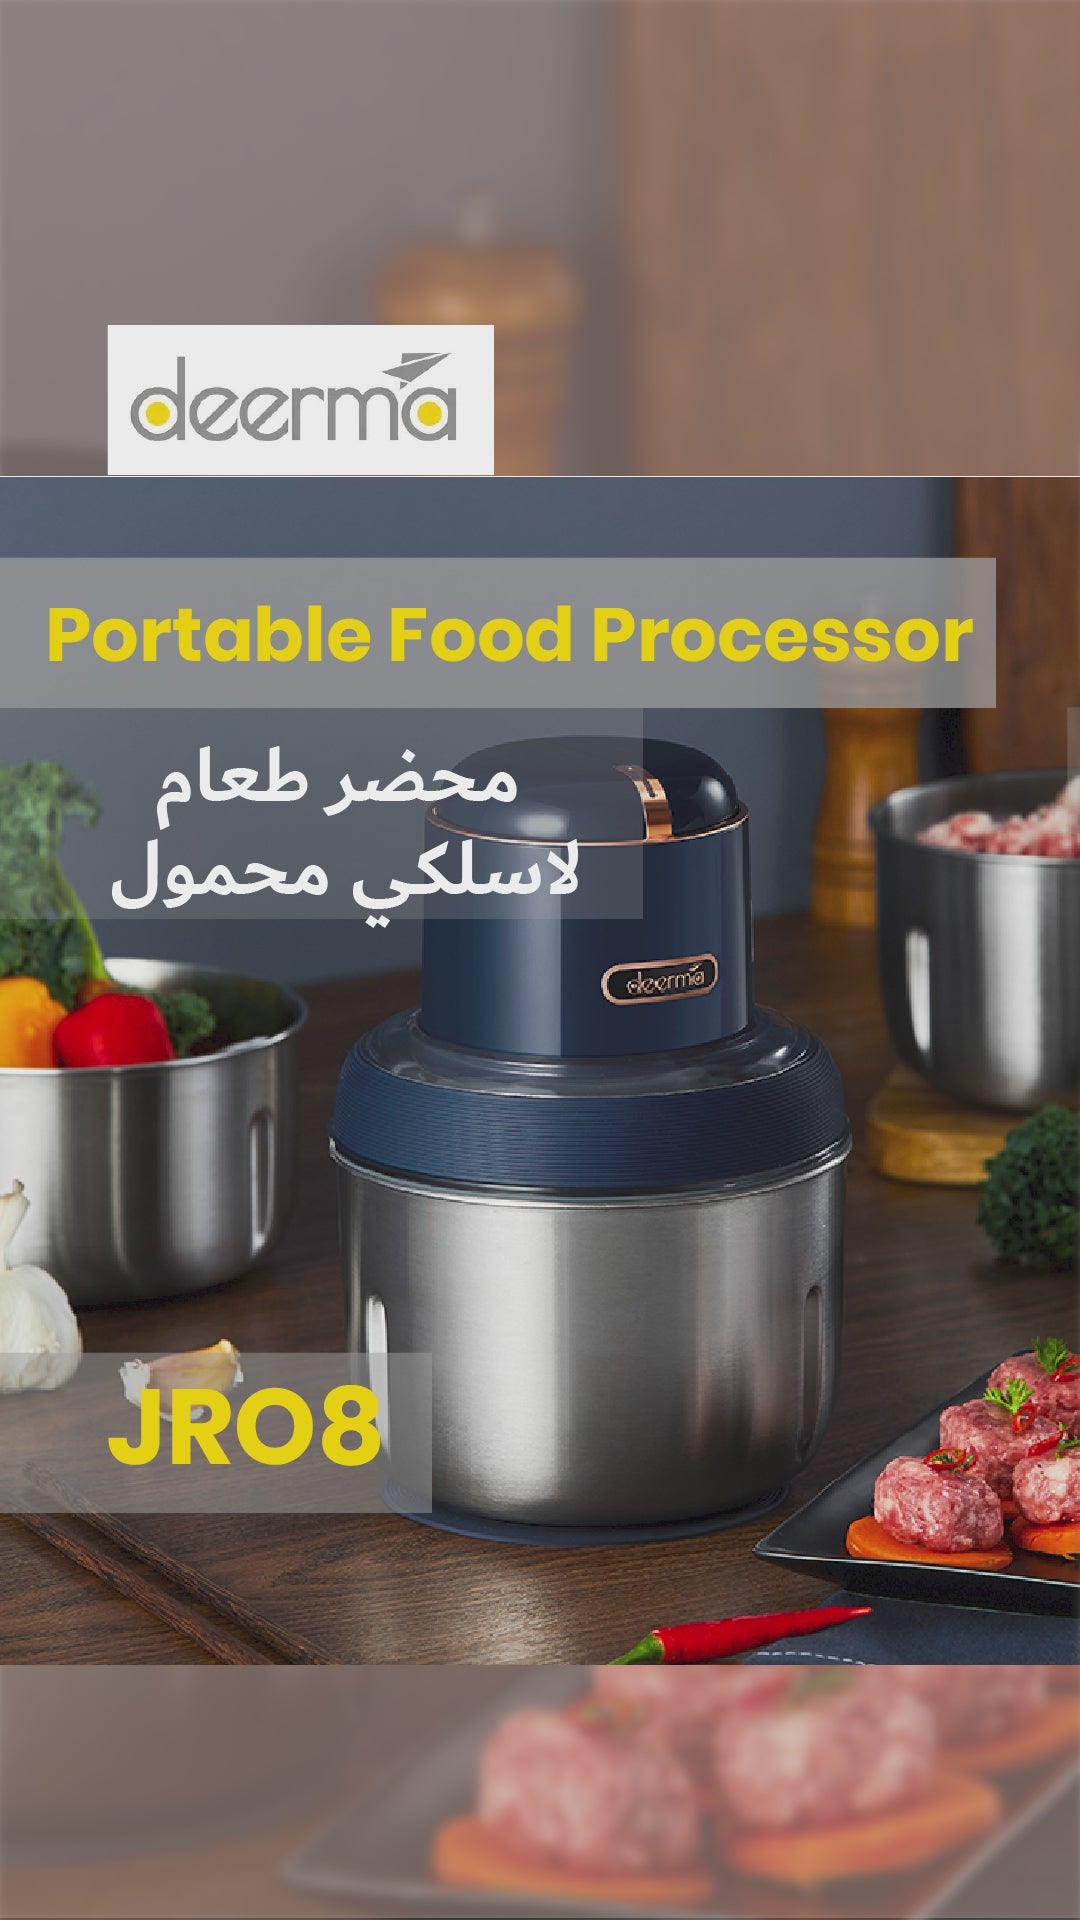 Deerma JR08 3 in 1 Wireless Portable Multifunctional Food Processor - Blue